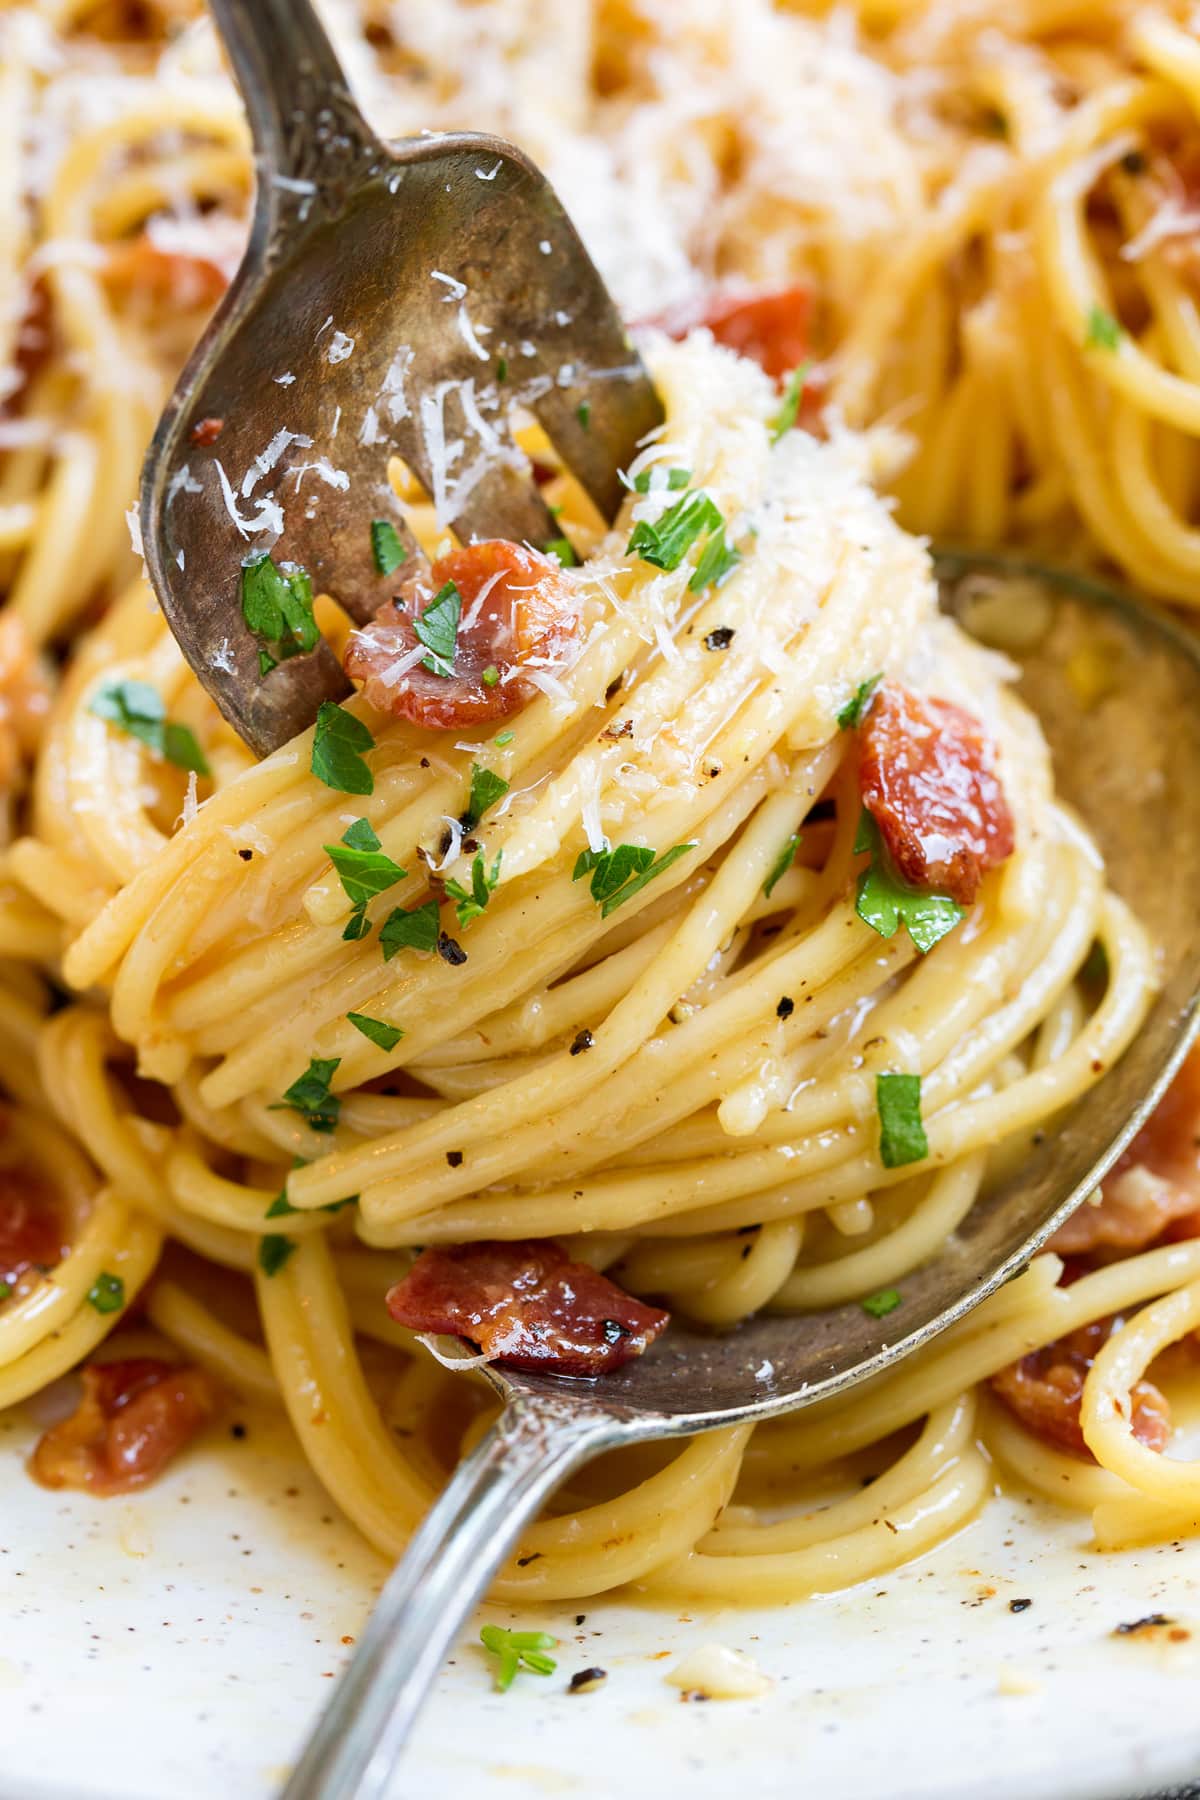 Spaghetti carbonara shown close up swirled around a fork.